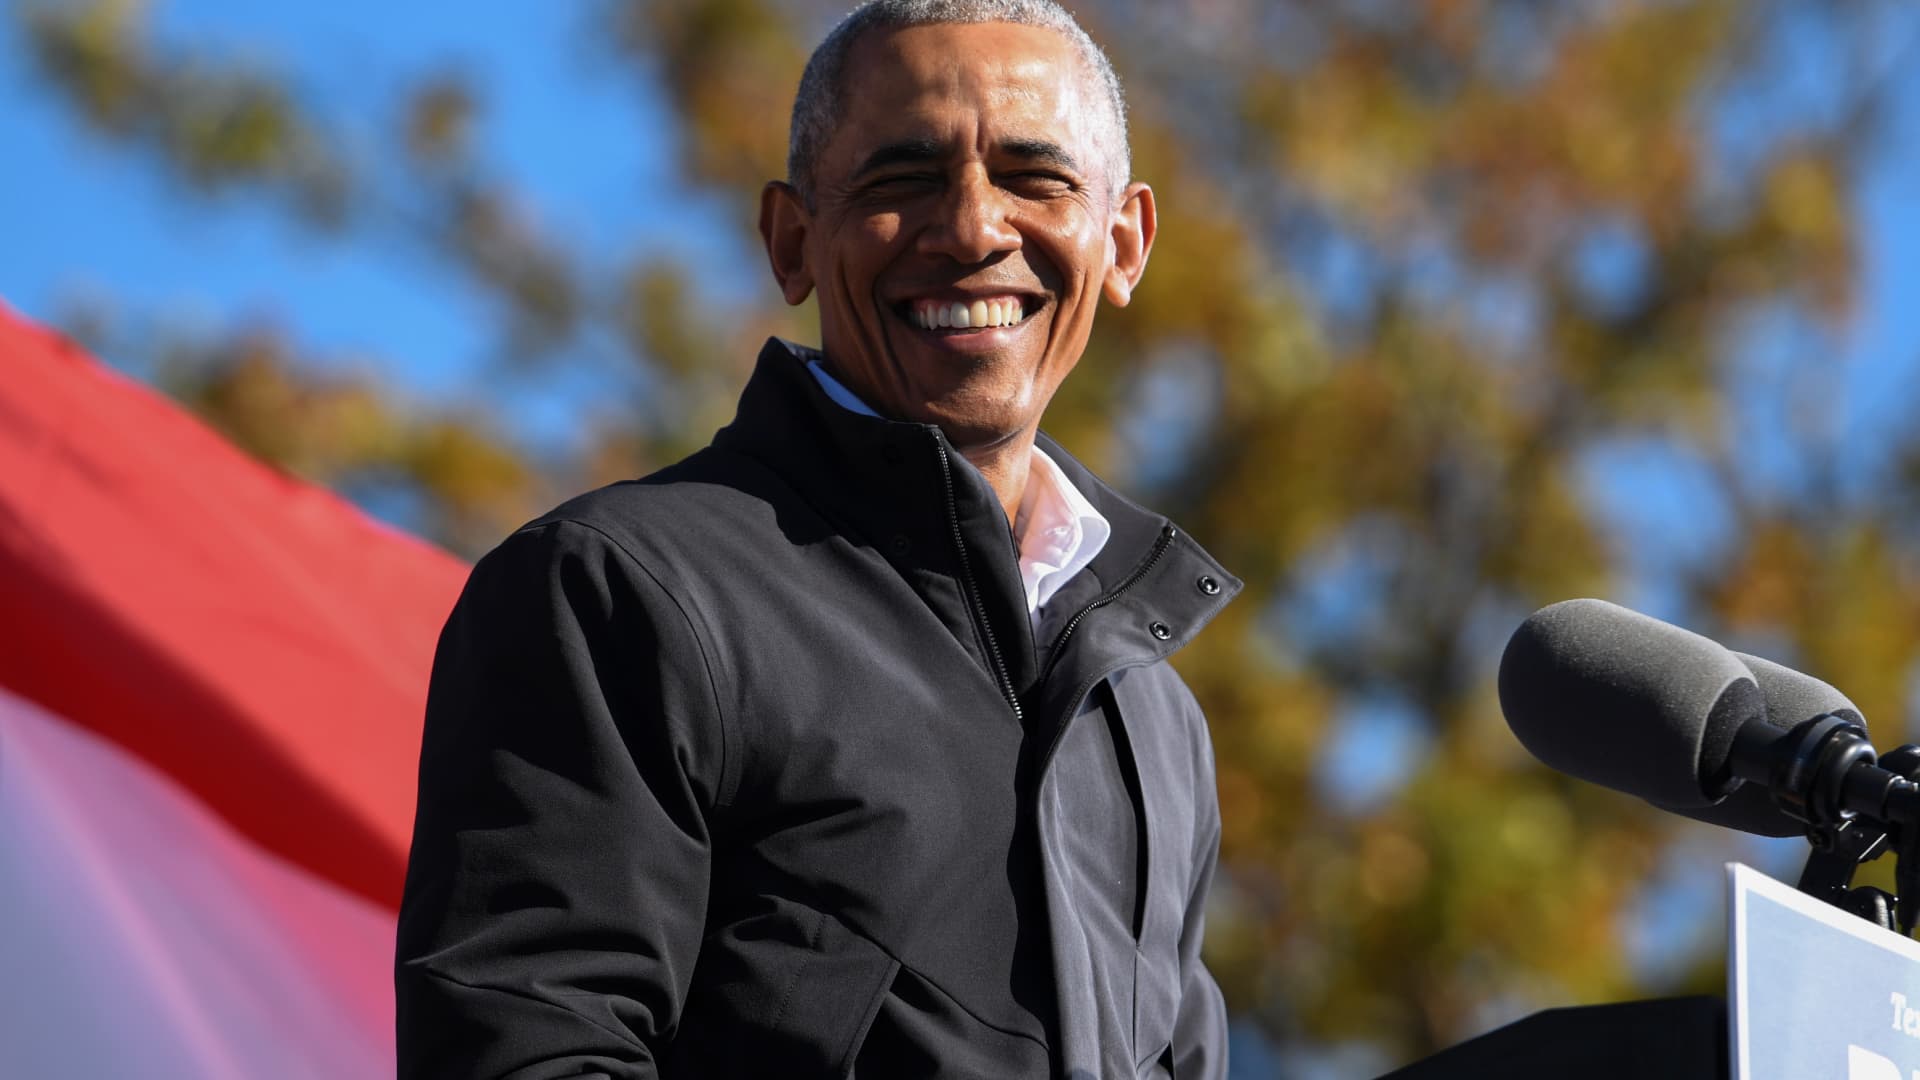 Former President Barack Obama addresses voters one day before the election, in Atlanta, Georgia, November 2, 2020.